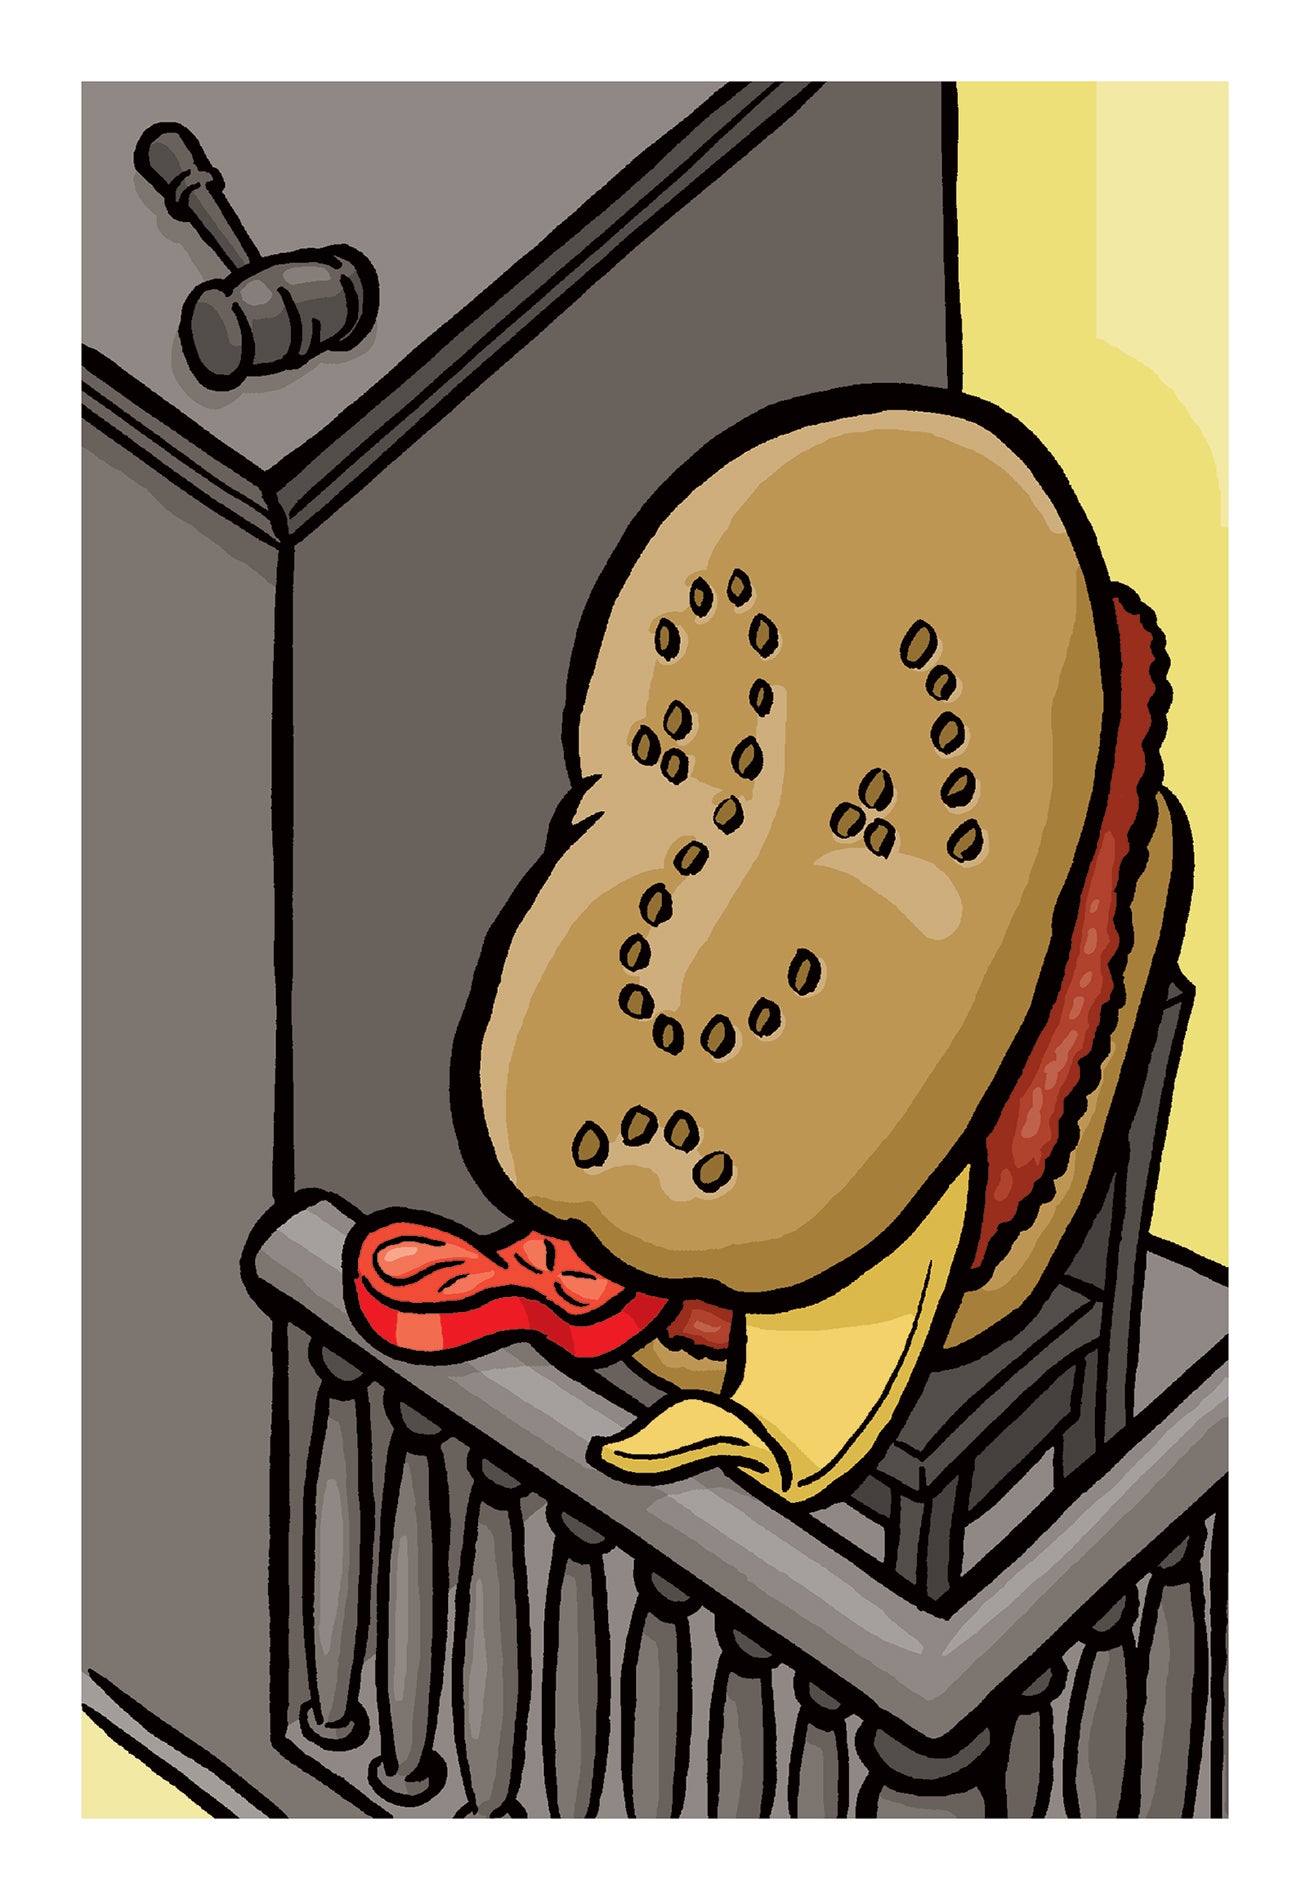 Illustration: Burger sitting on the judge's stand